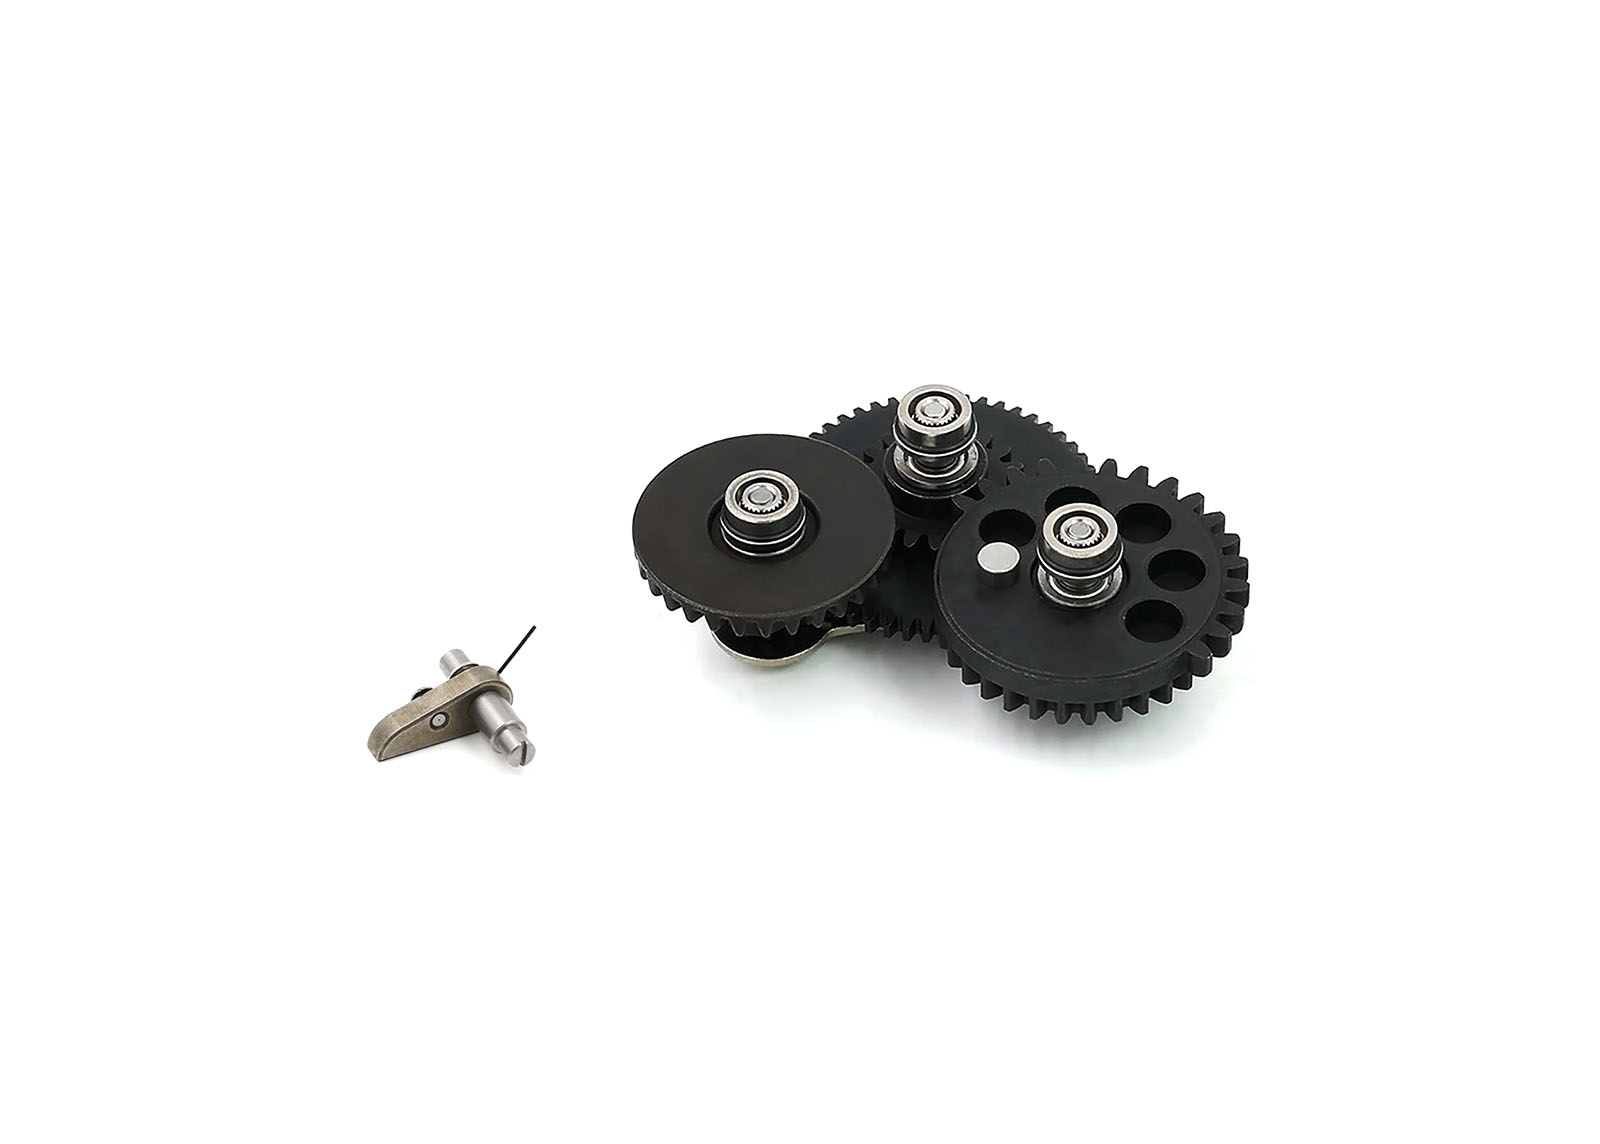 Modular Gear Set - SMOOTH 8mm Ver.2/Ver.3 (NanoTorque 22.2:1) - Modify Airsoft parts